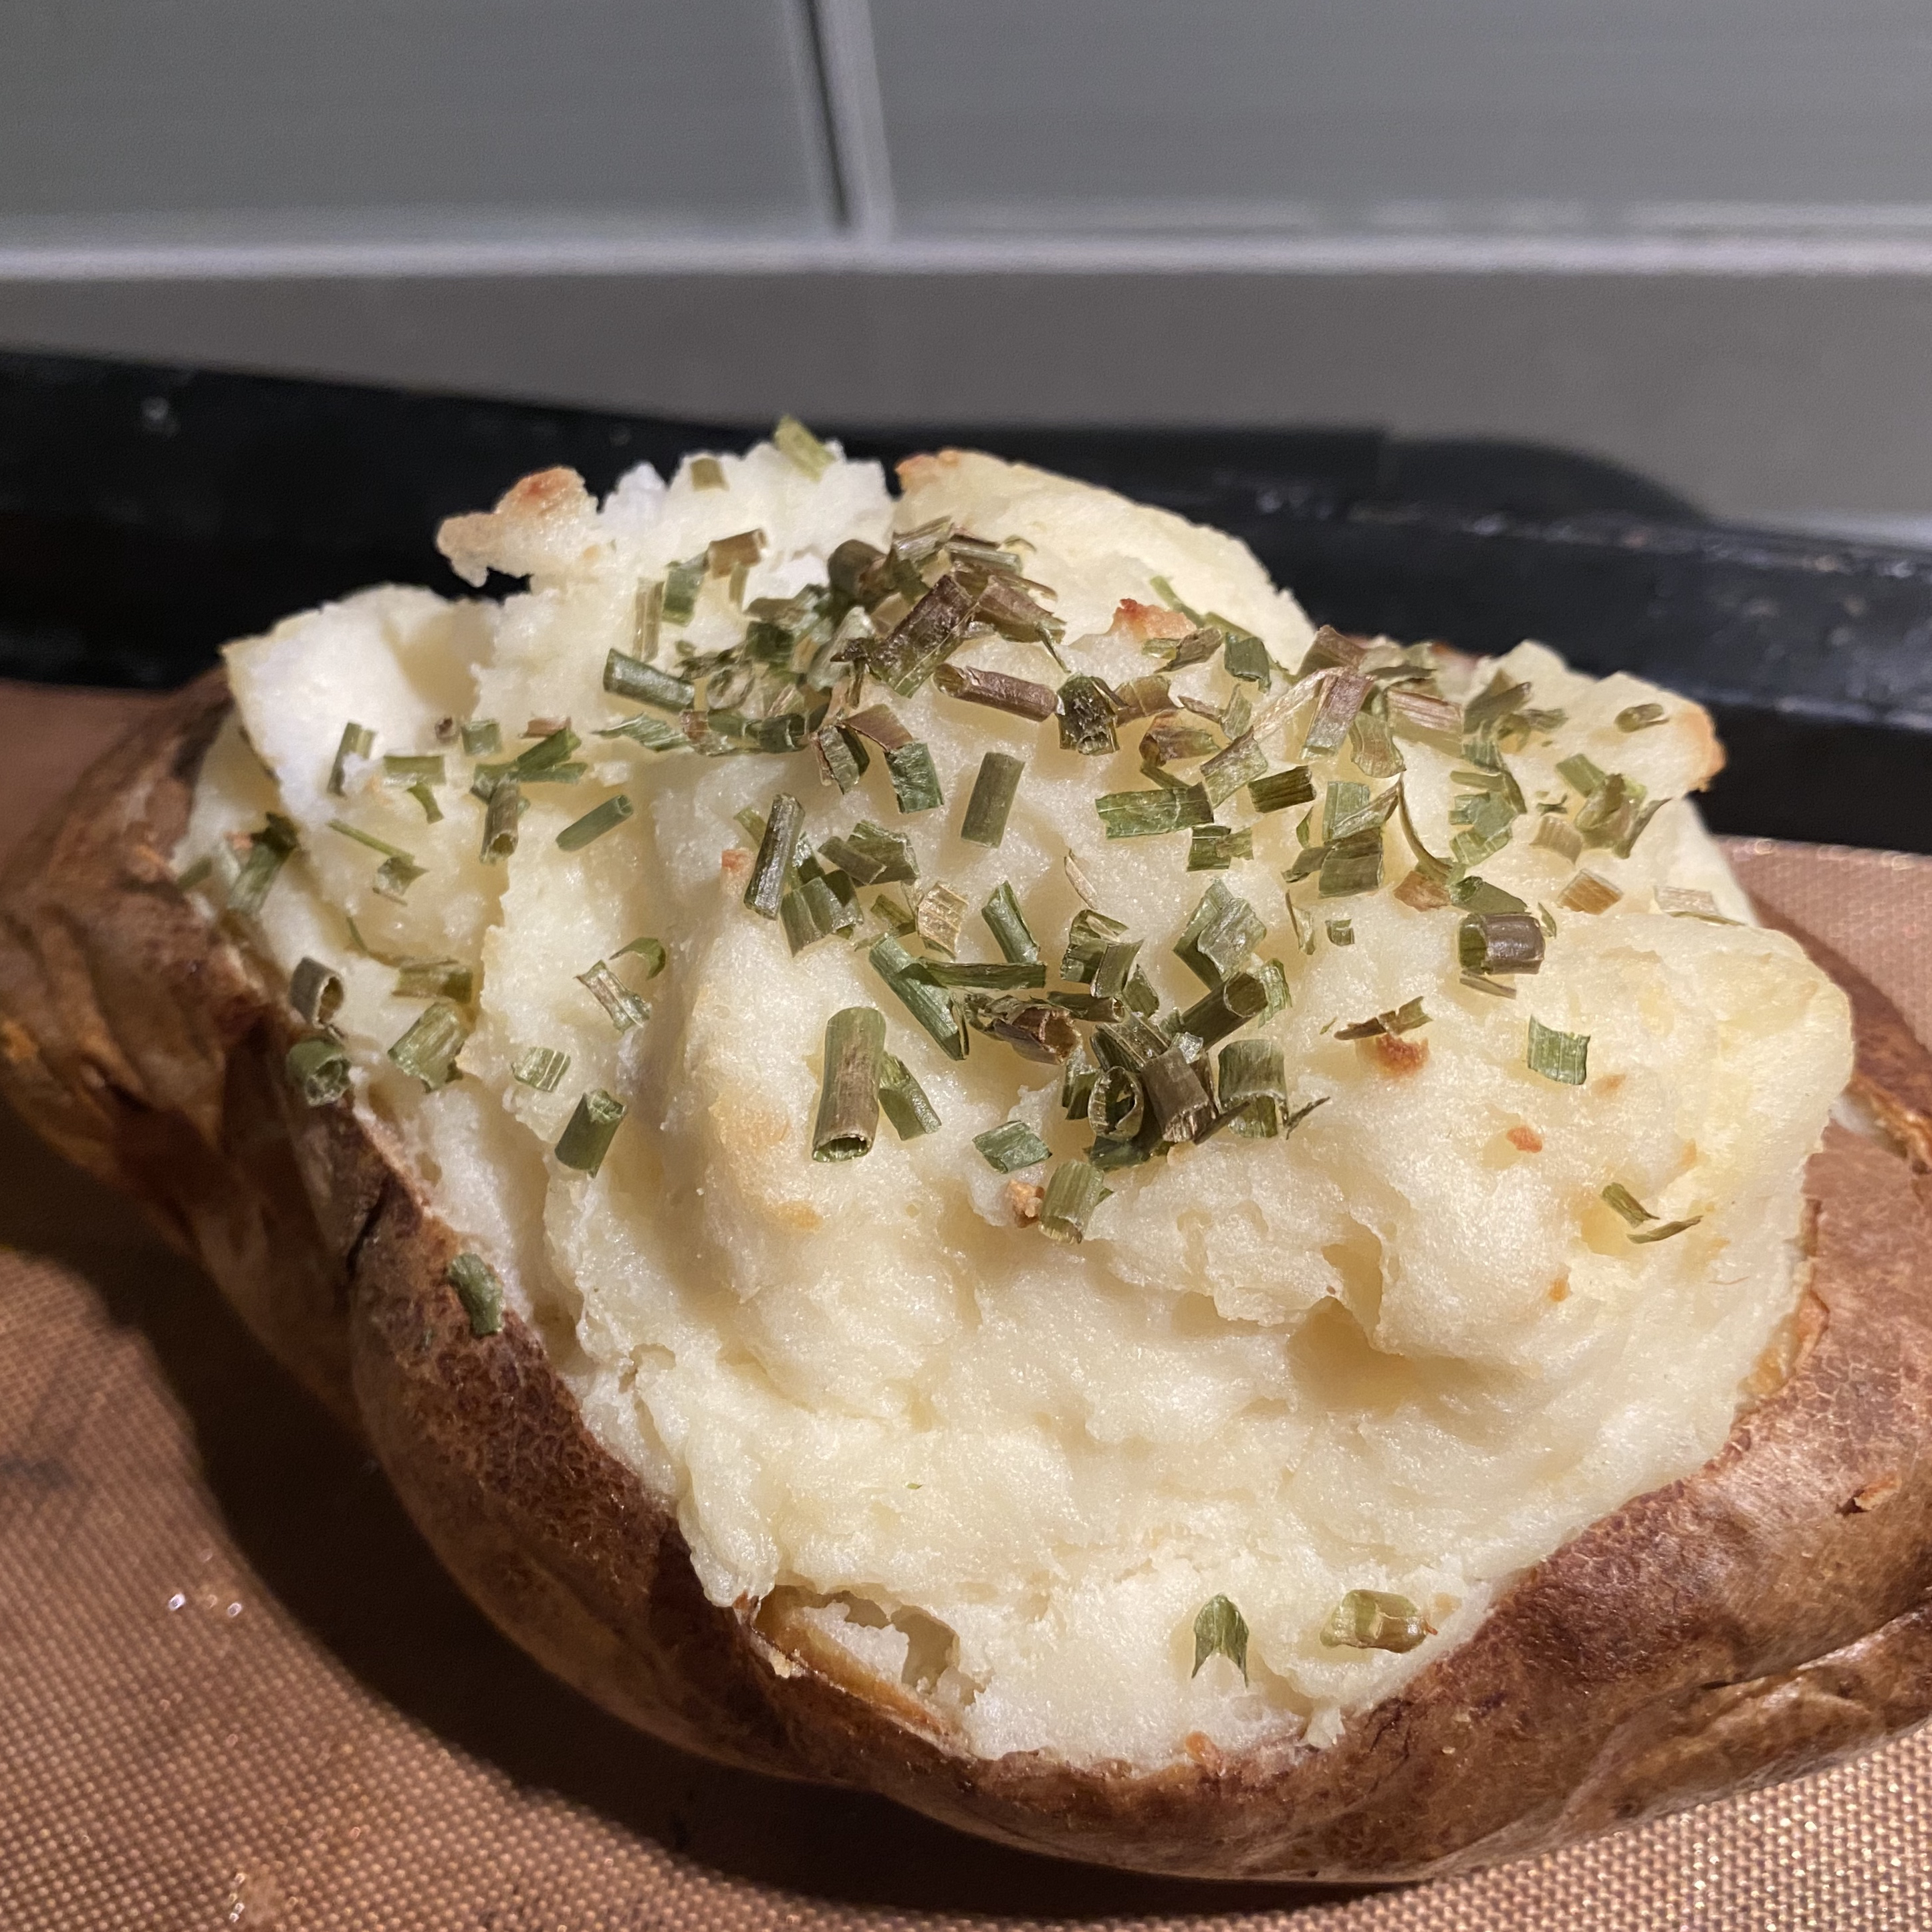 Creamy Twice-Baked Potatoes 